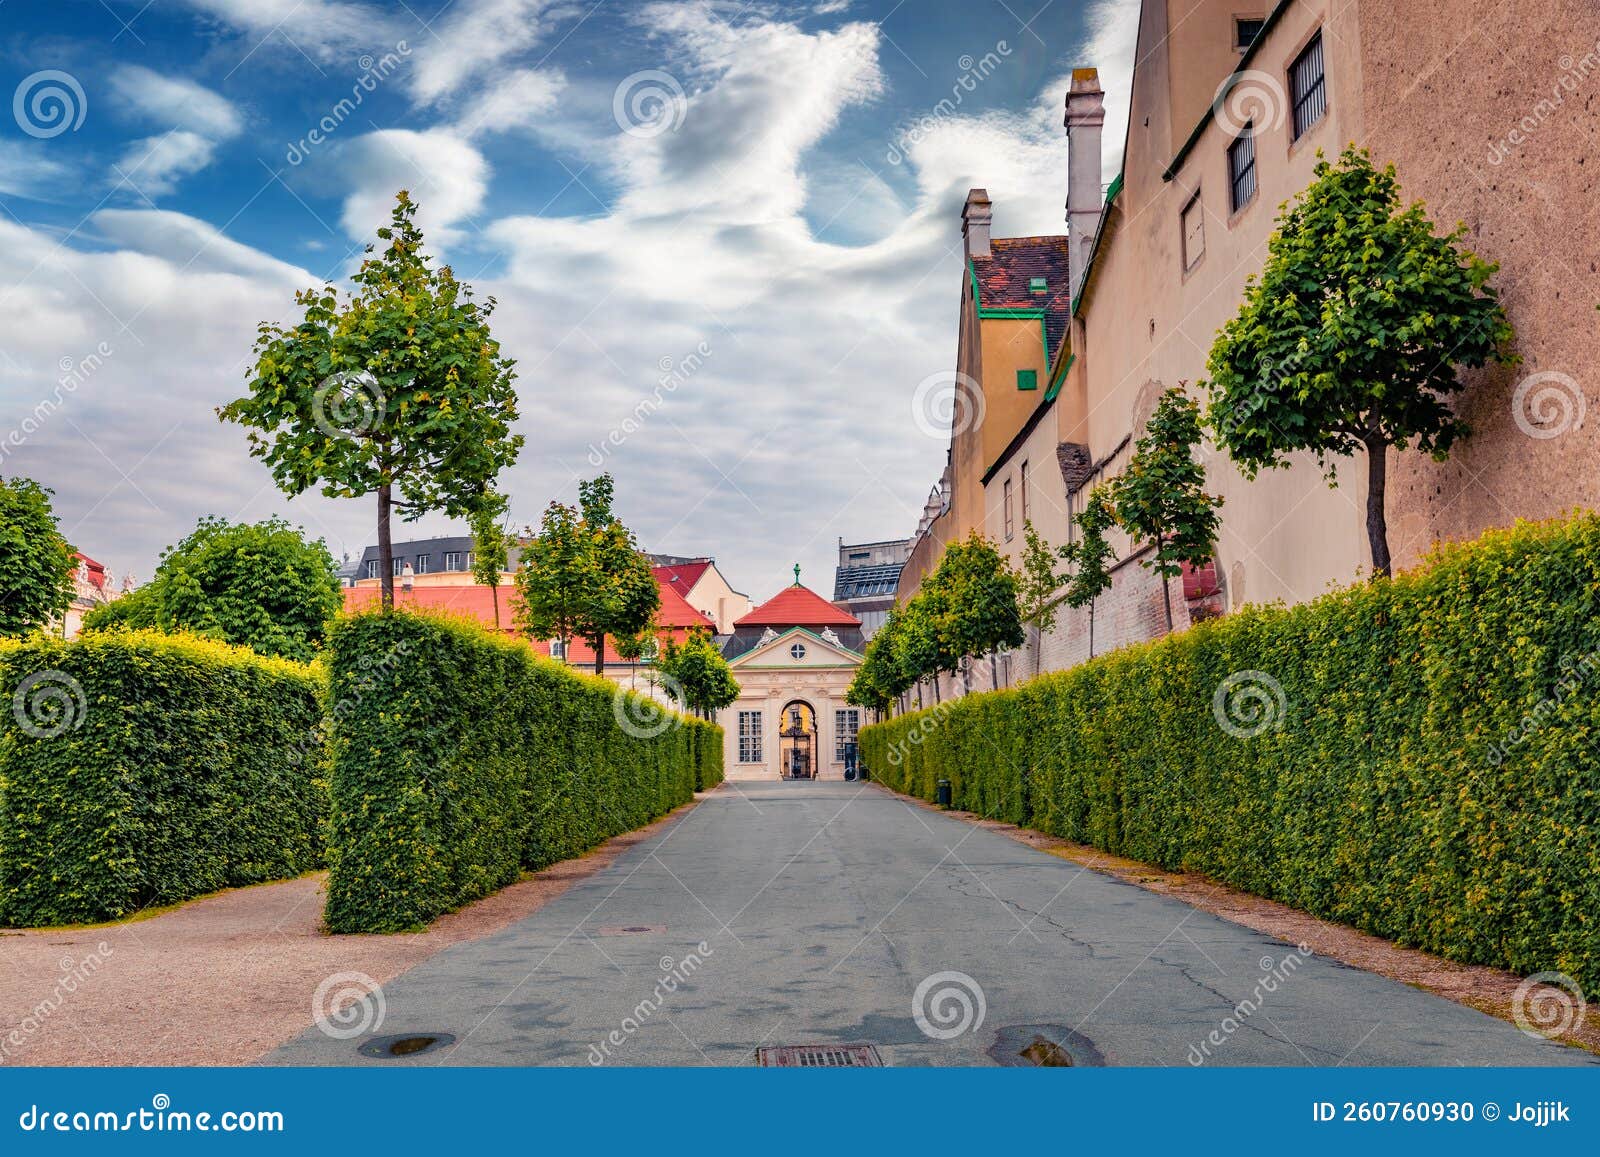 entrance in belvedere park, built by johann lukas von hildebrandt for prince eugene of savoy